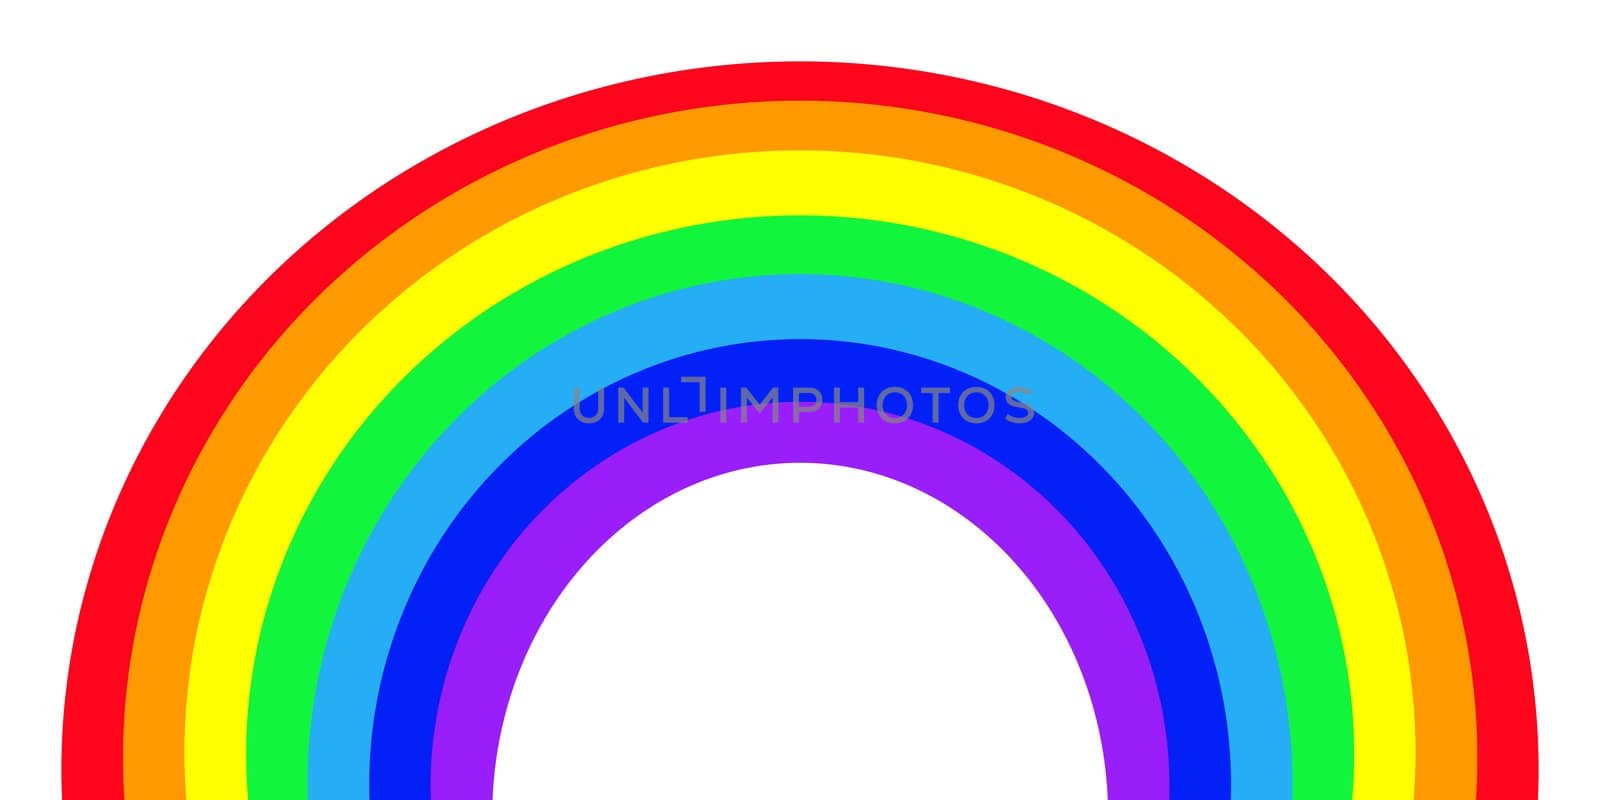 Colorful Rainbow isolated on white background.